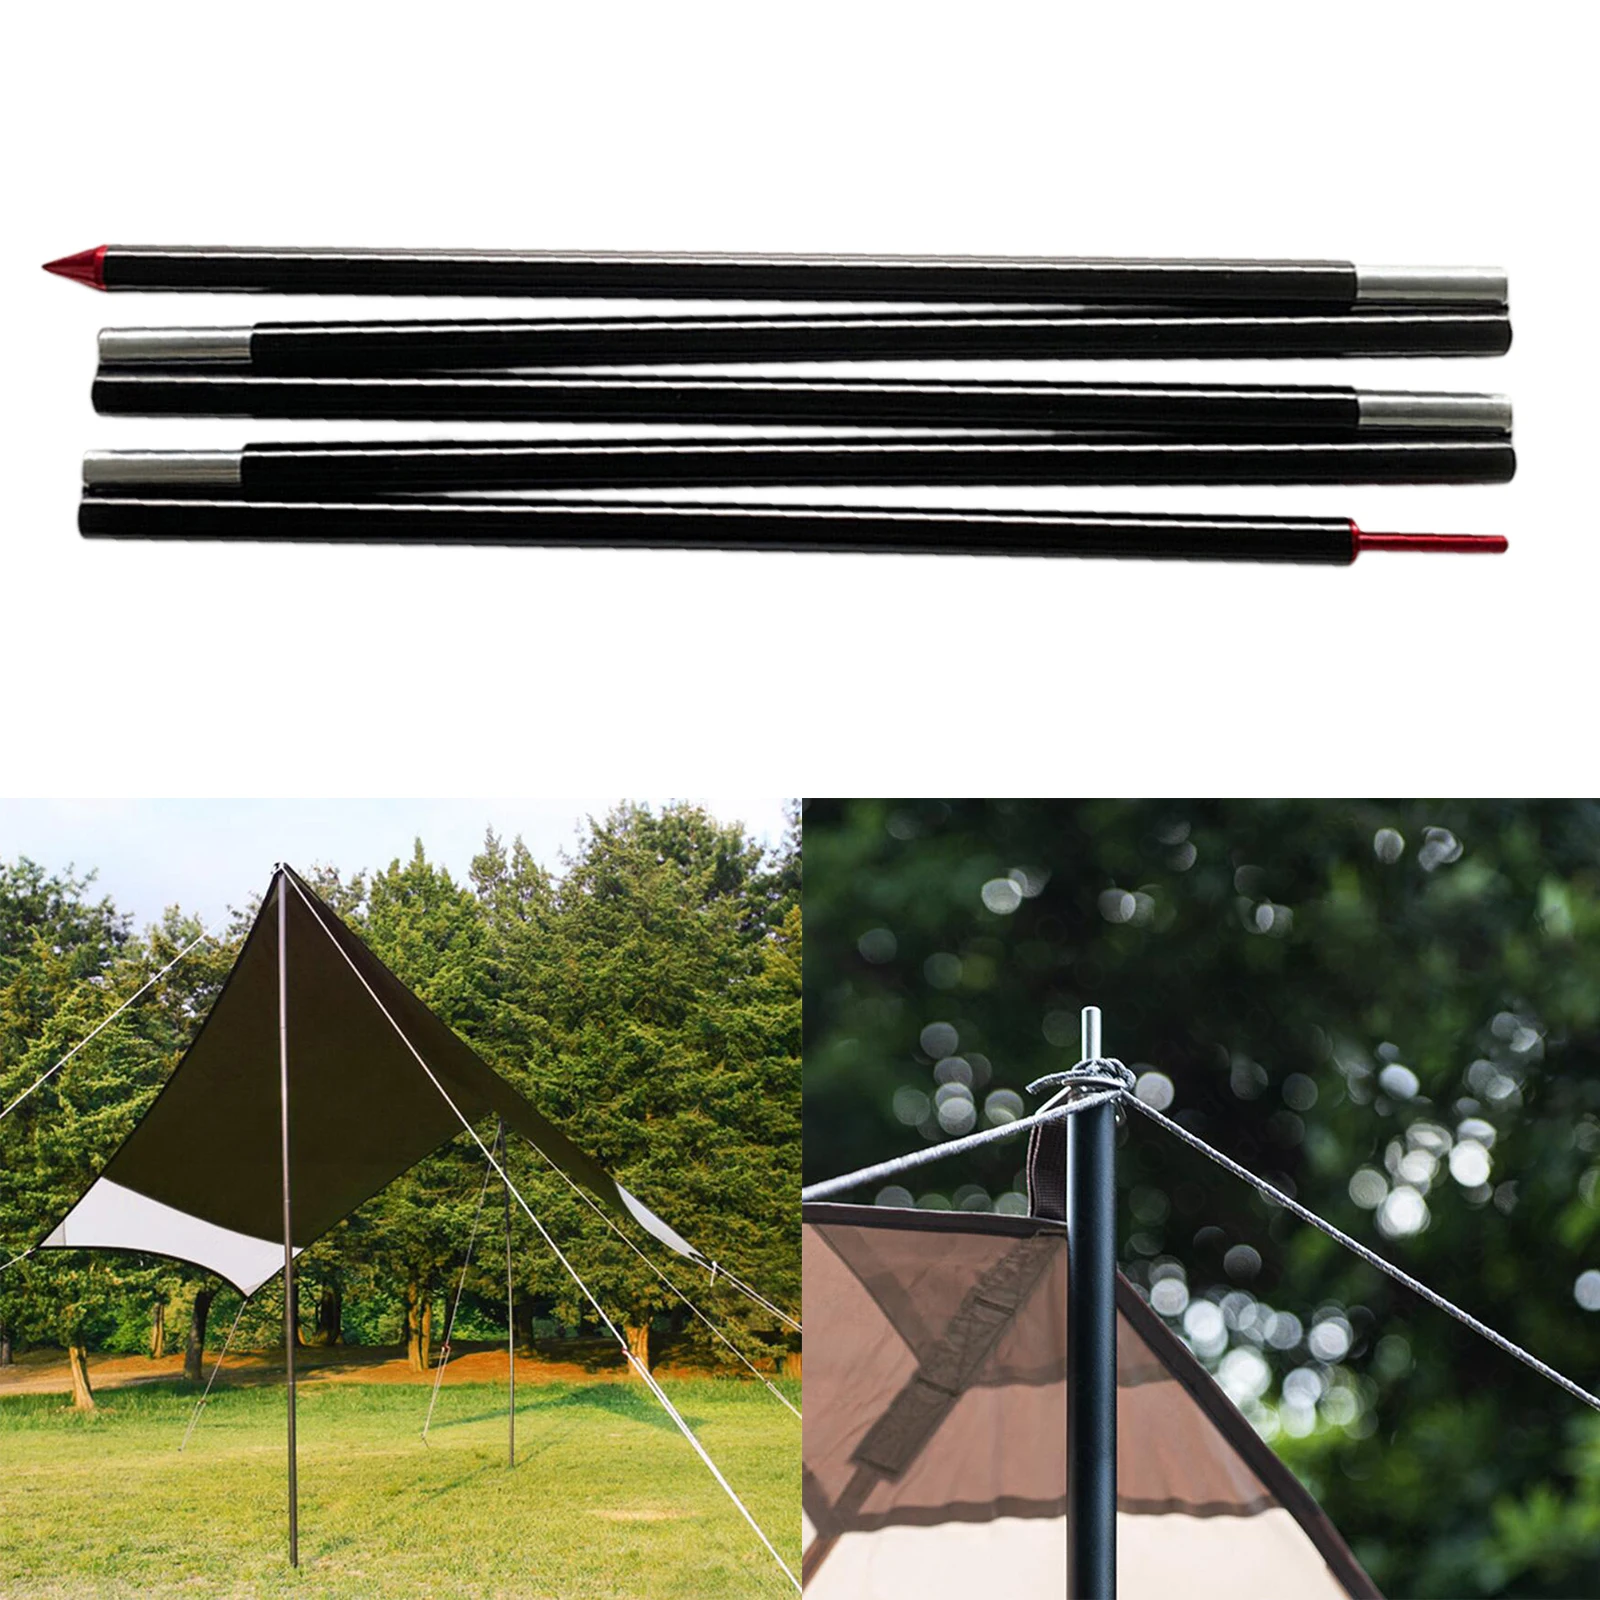 Universal Tarp Poles Tent Rod Shelter Building Sticks w/ Storage Pouch